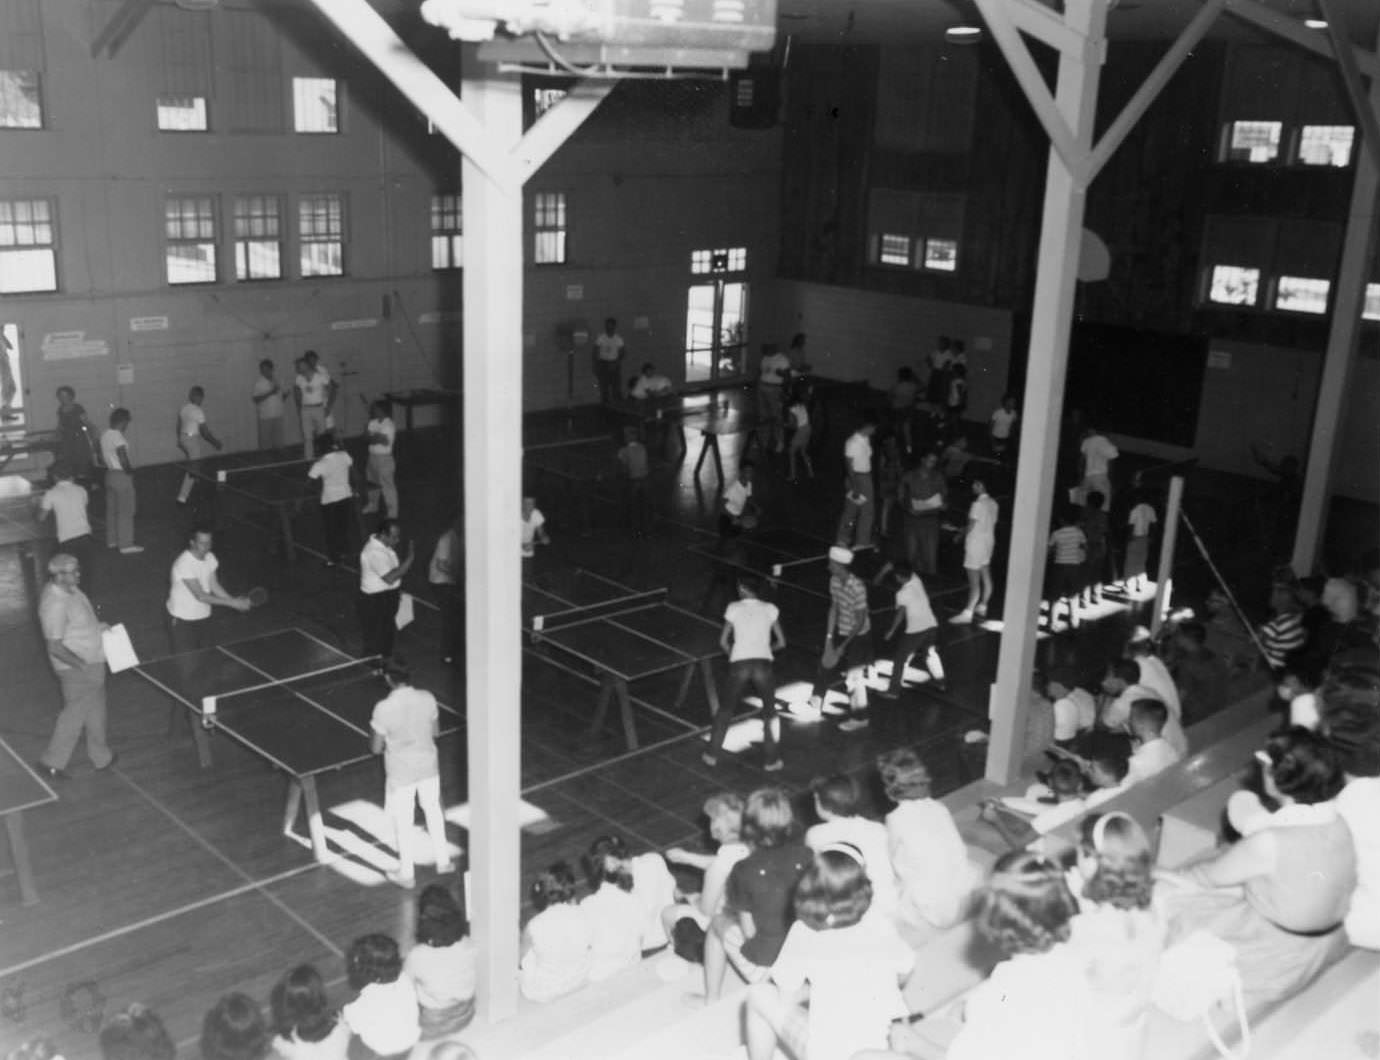 Inter-playground table tennis tournament at Austin Athletic Center, 1961.